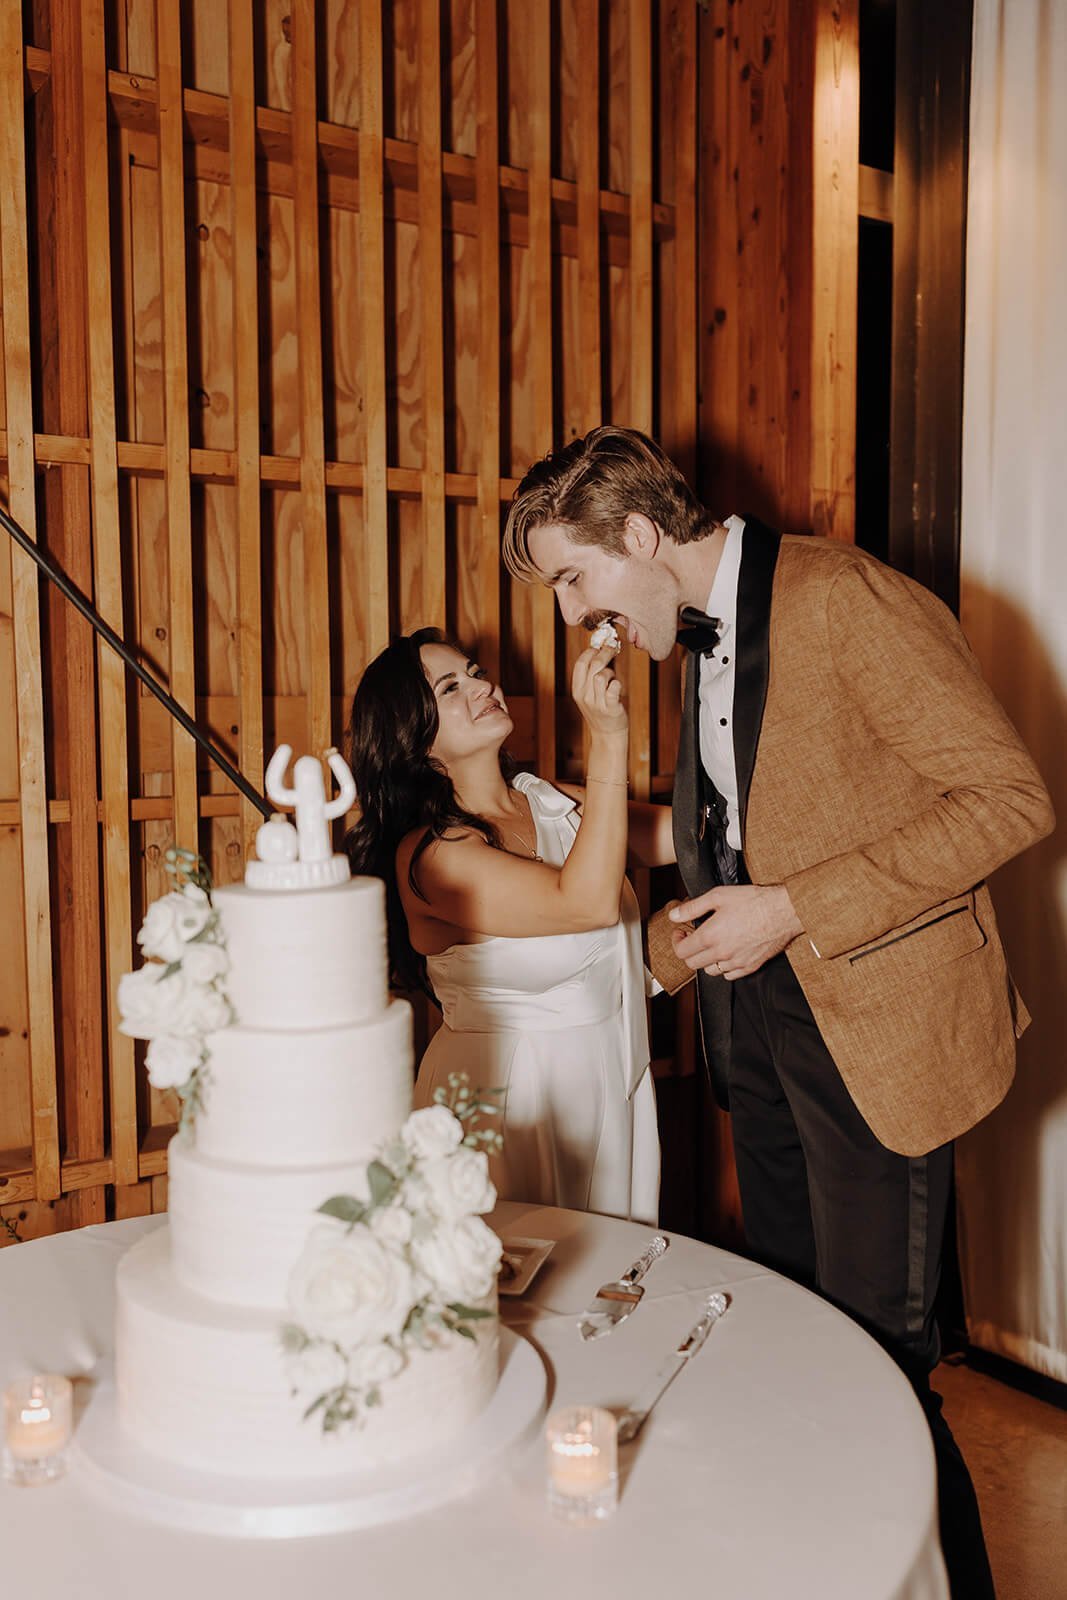 Bride and groom feed each other wedding cake at Arizona desert wedding